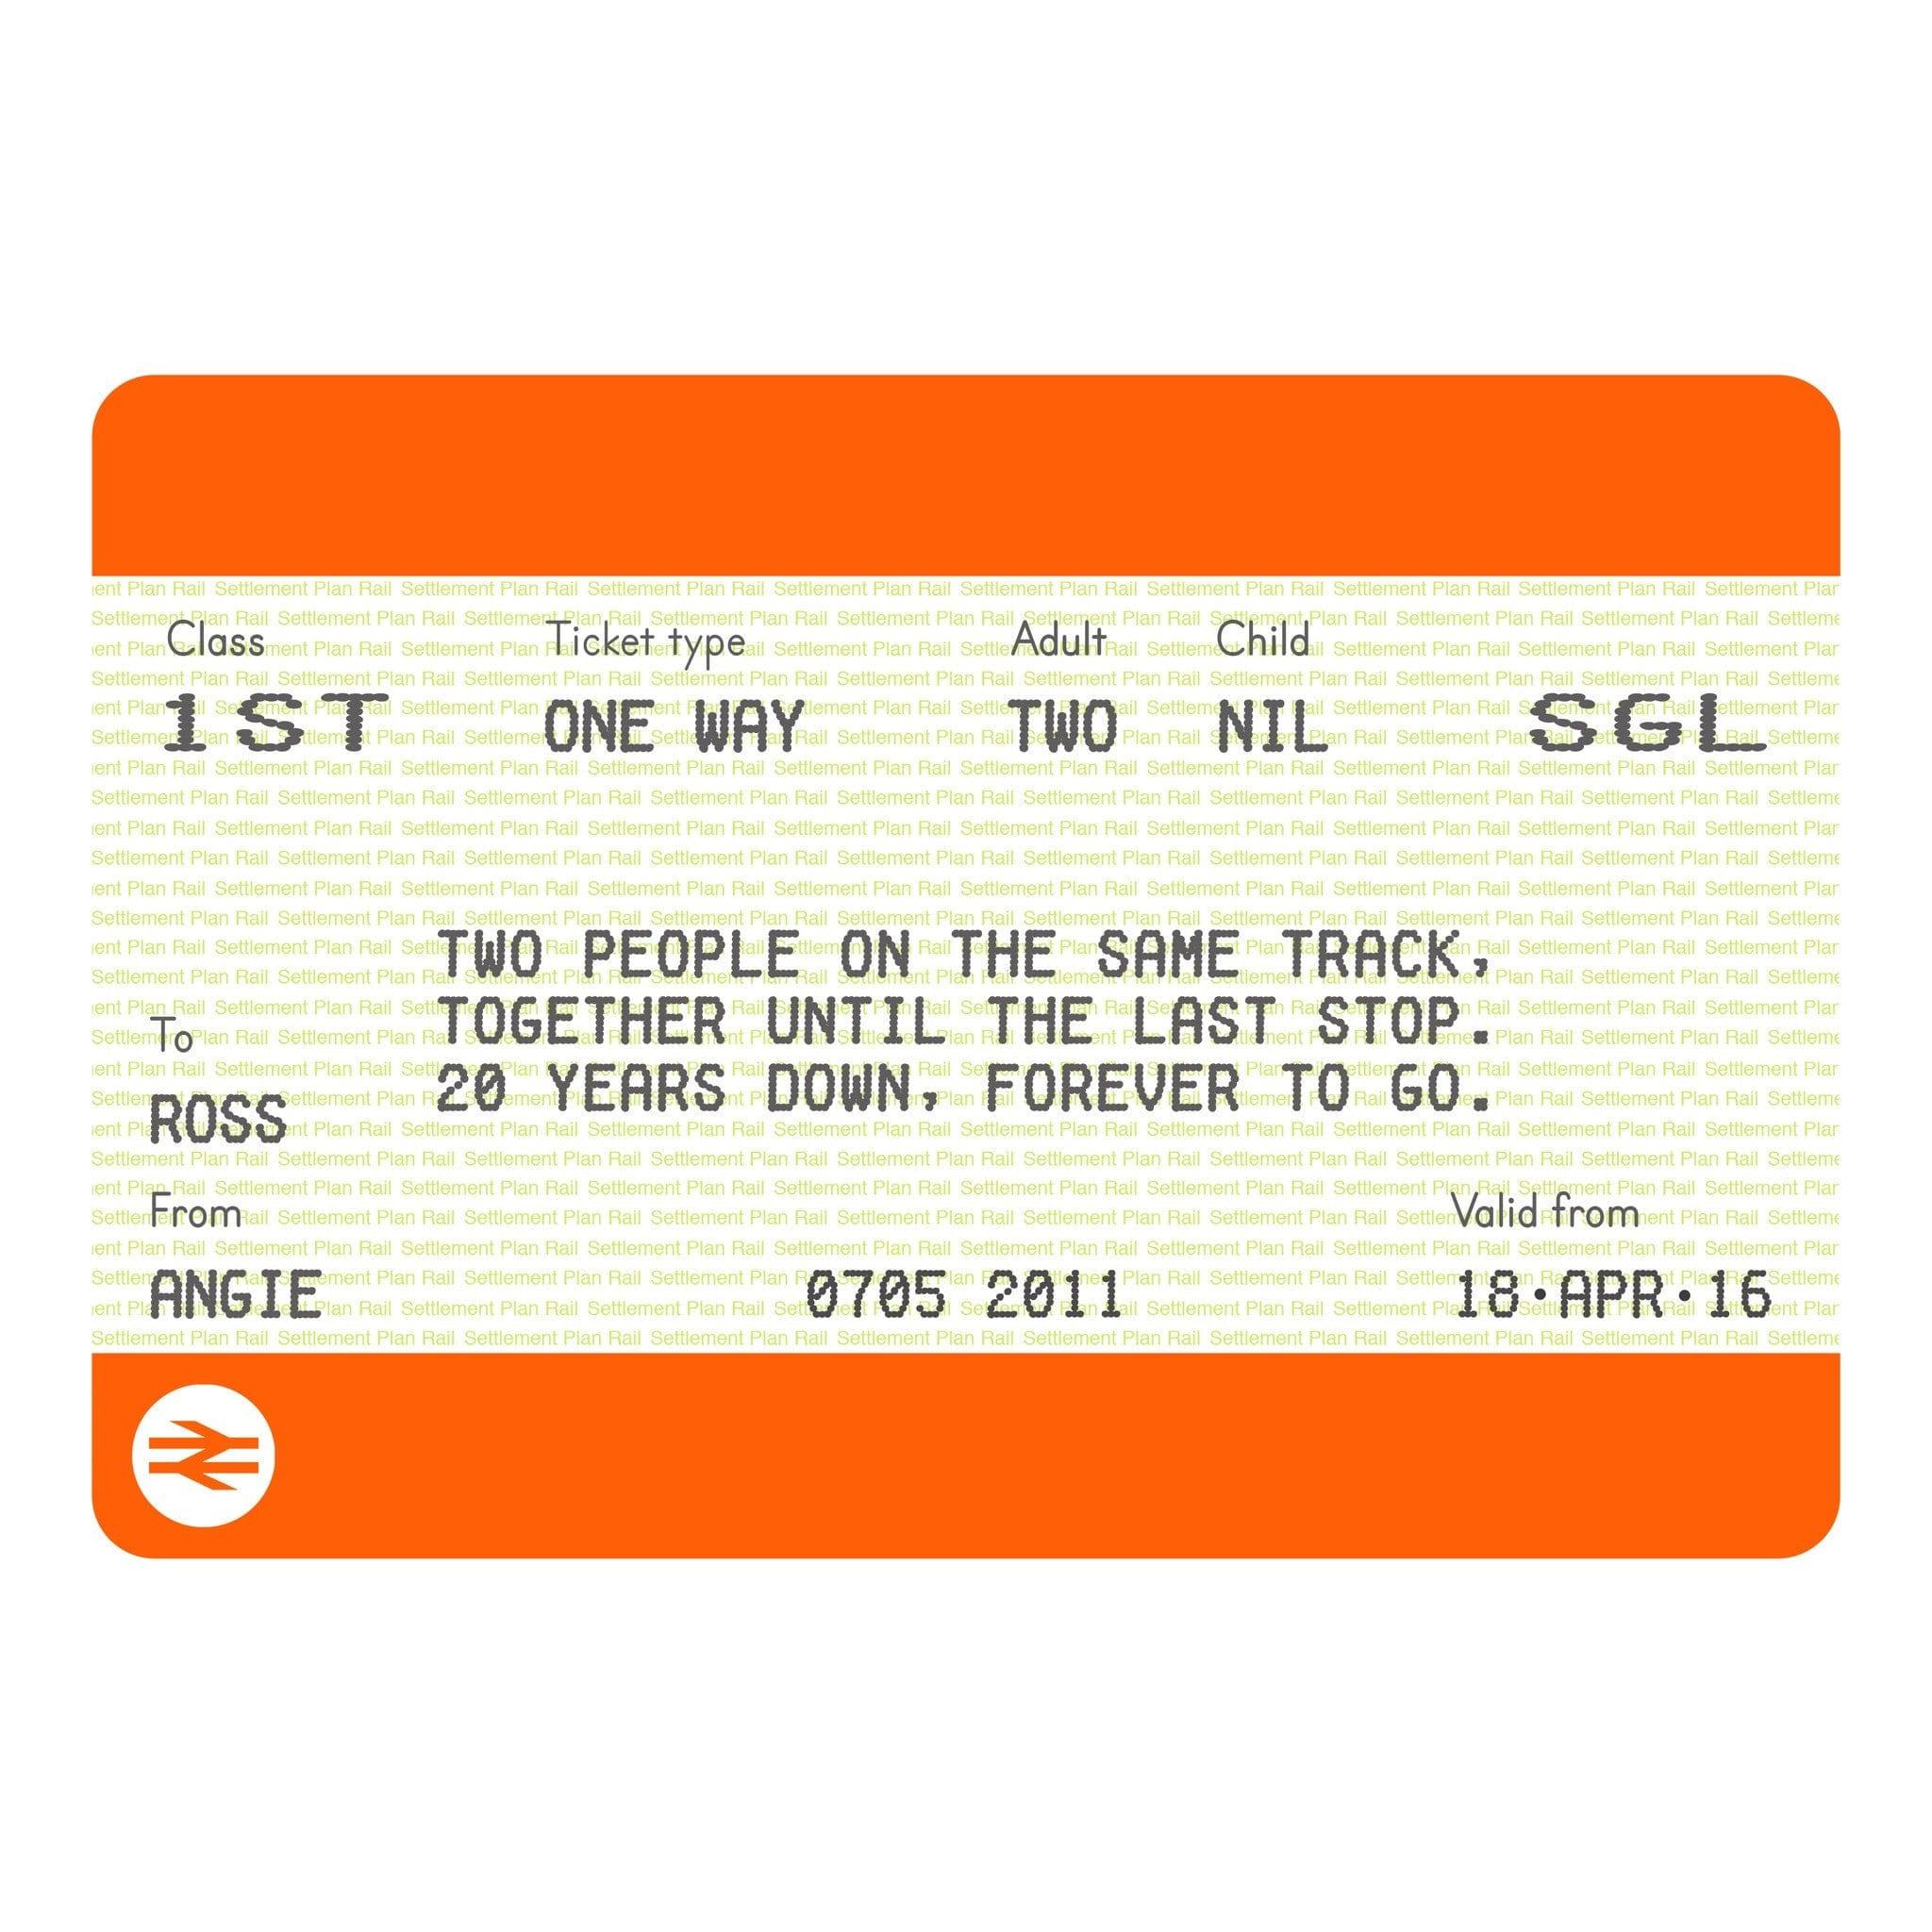 Переведи ticket. Билет Railway. Билет ticket. Train ticket. Train ticket to London.